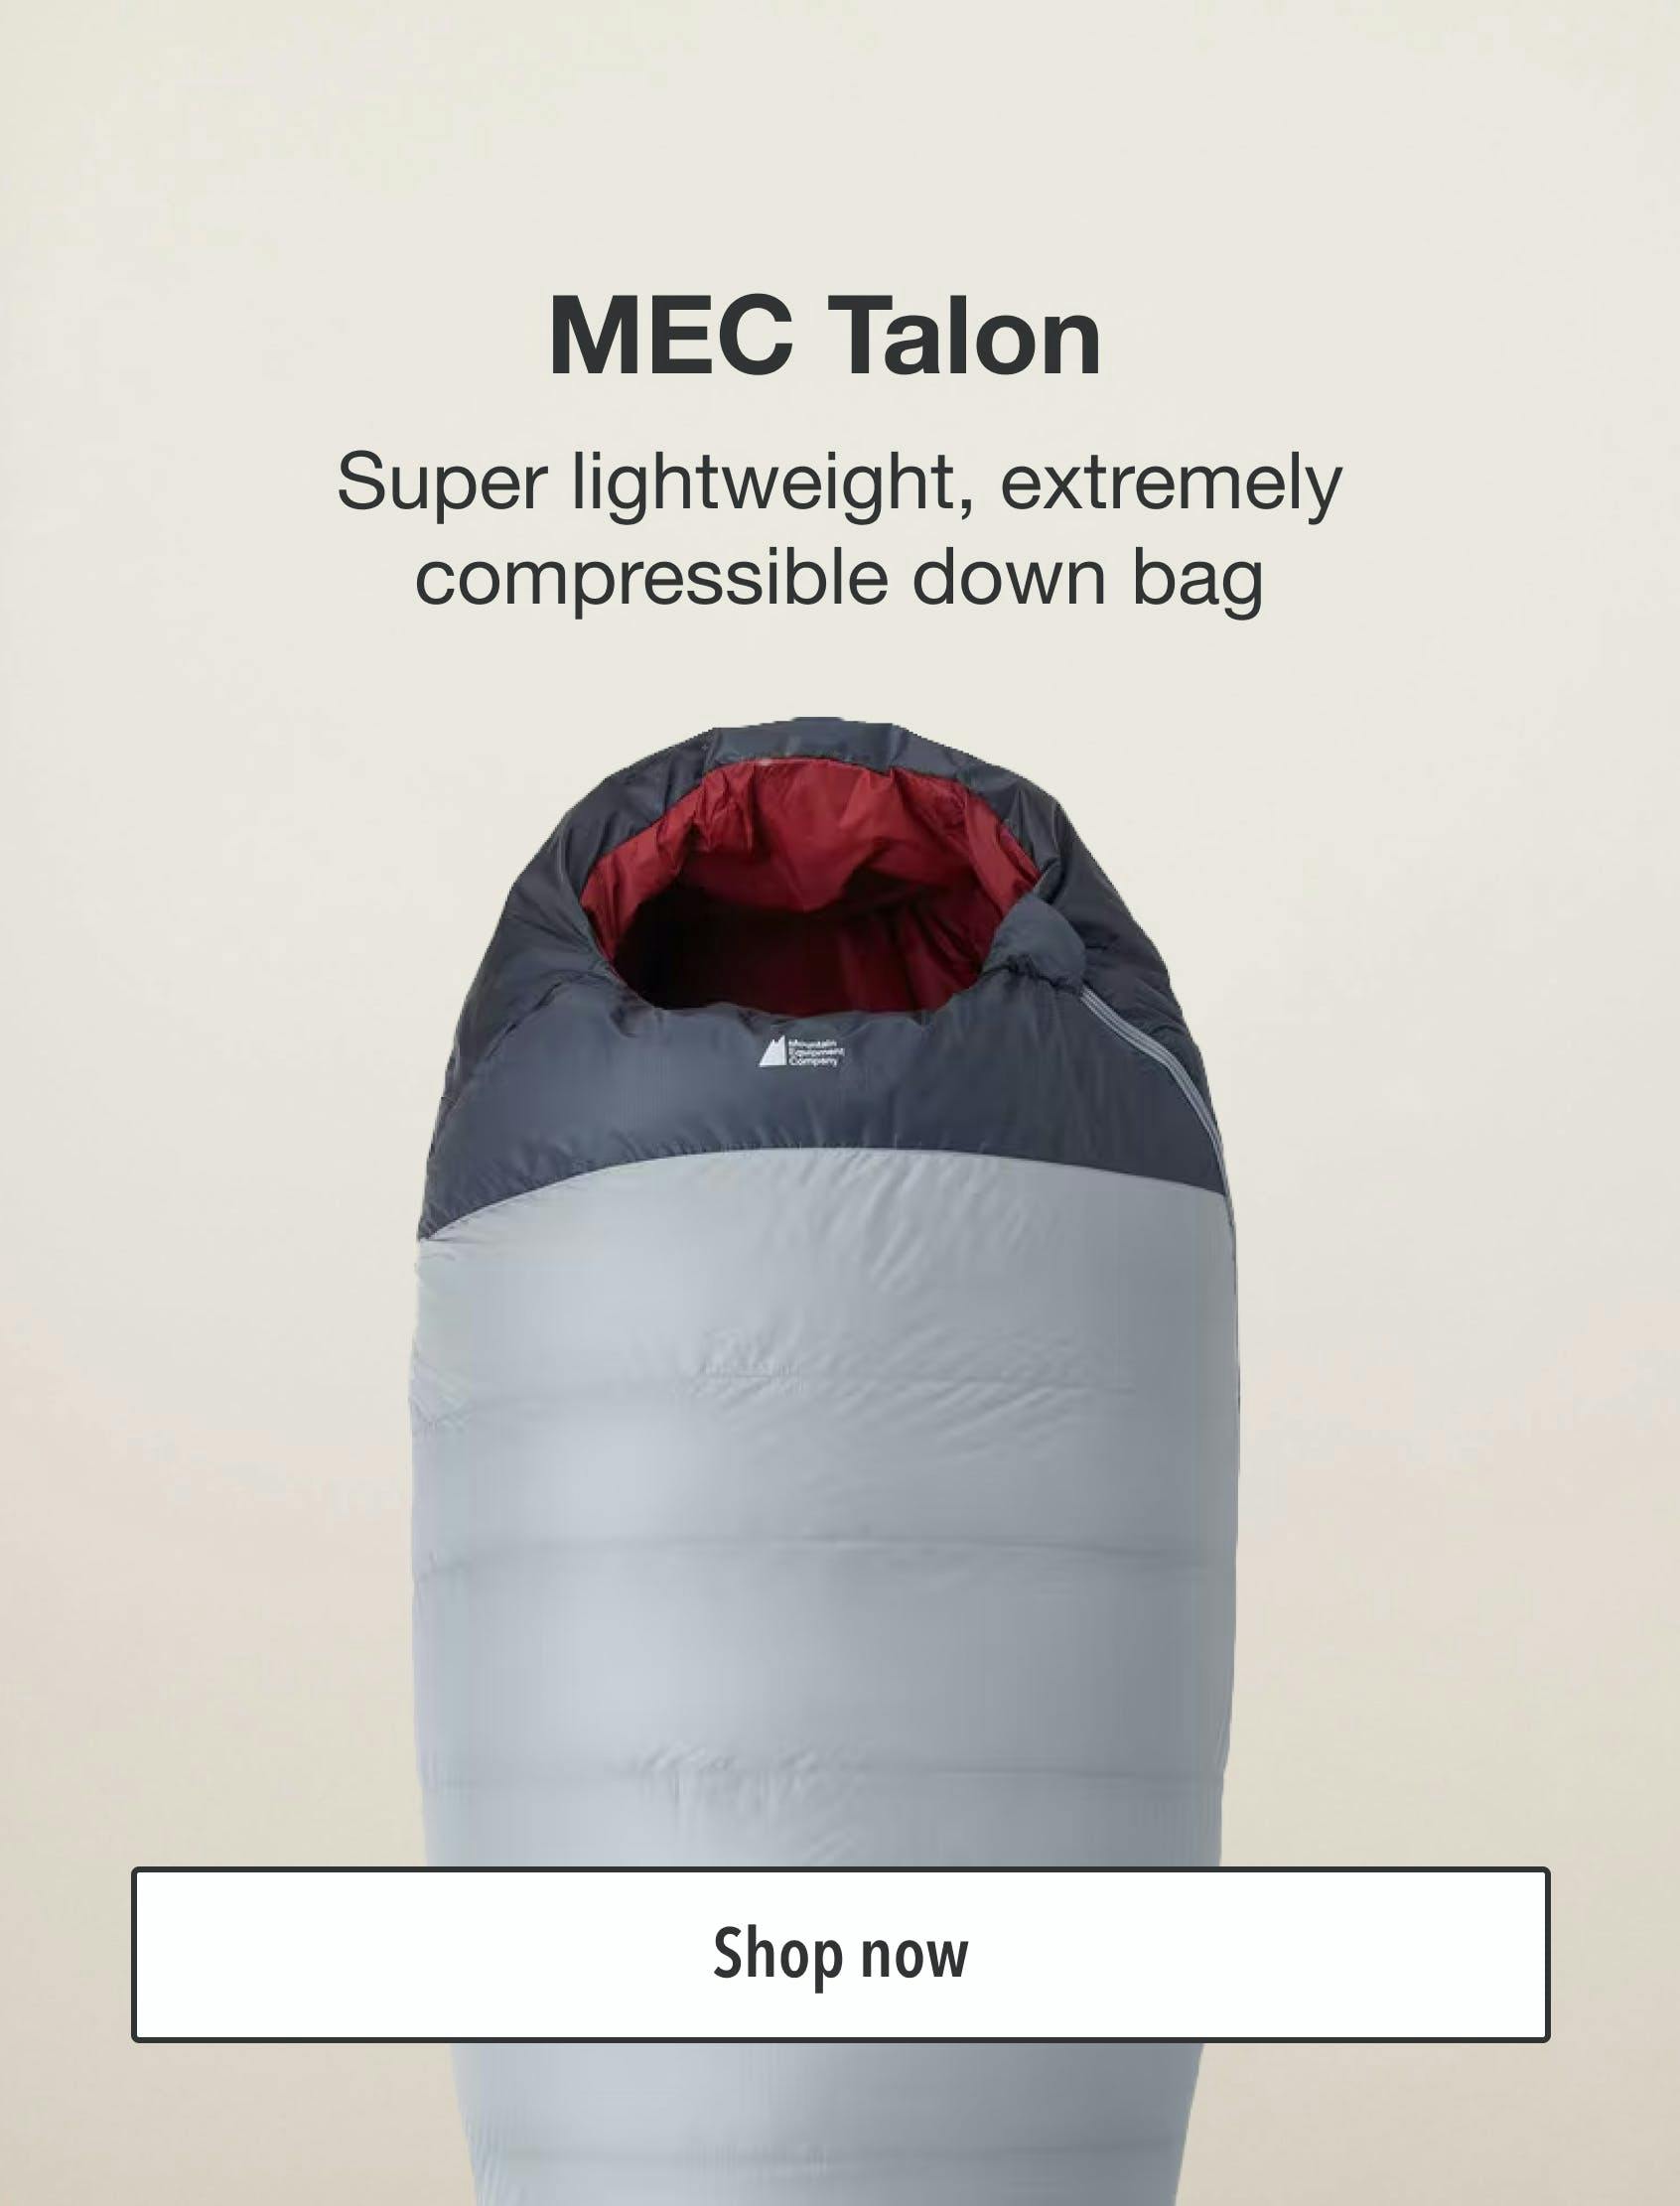 MEC Talon. Super lightweight, extremely compressible down bag